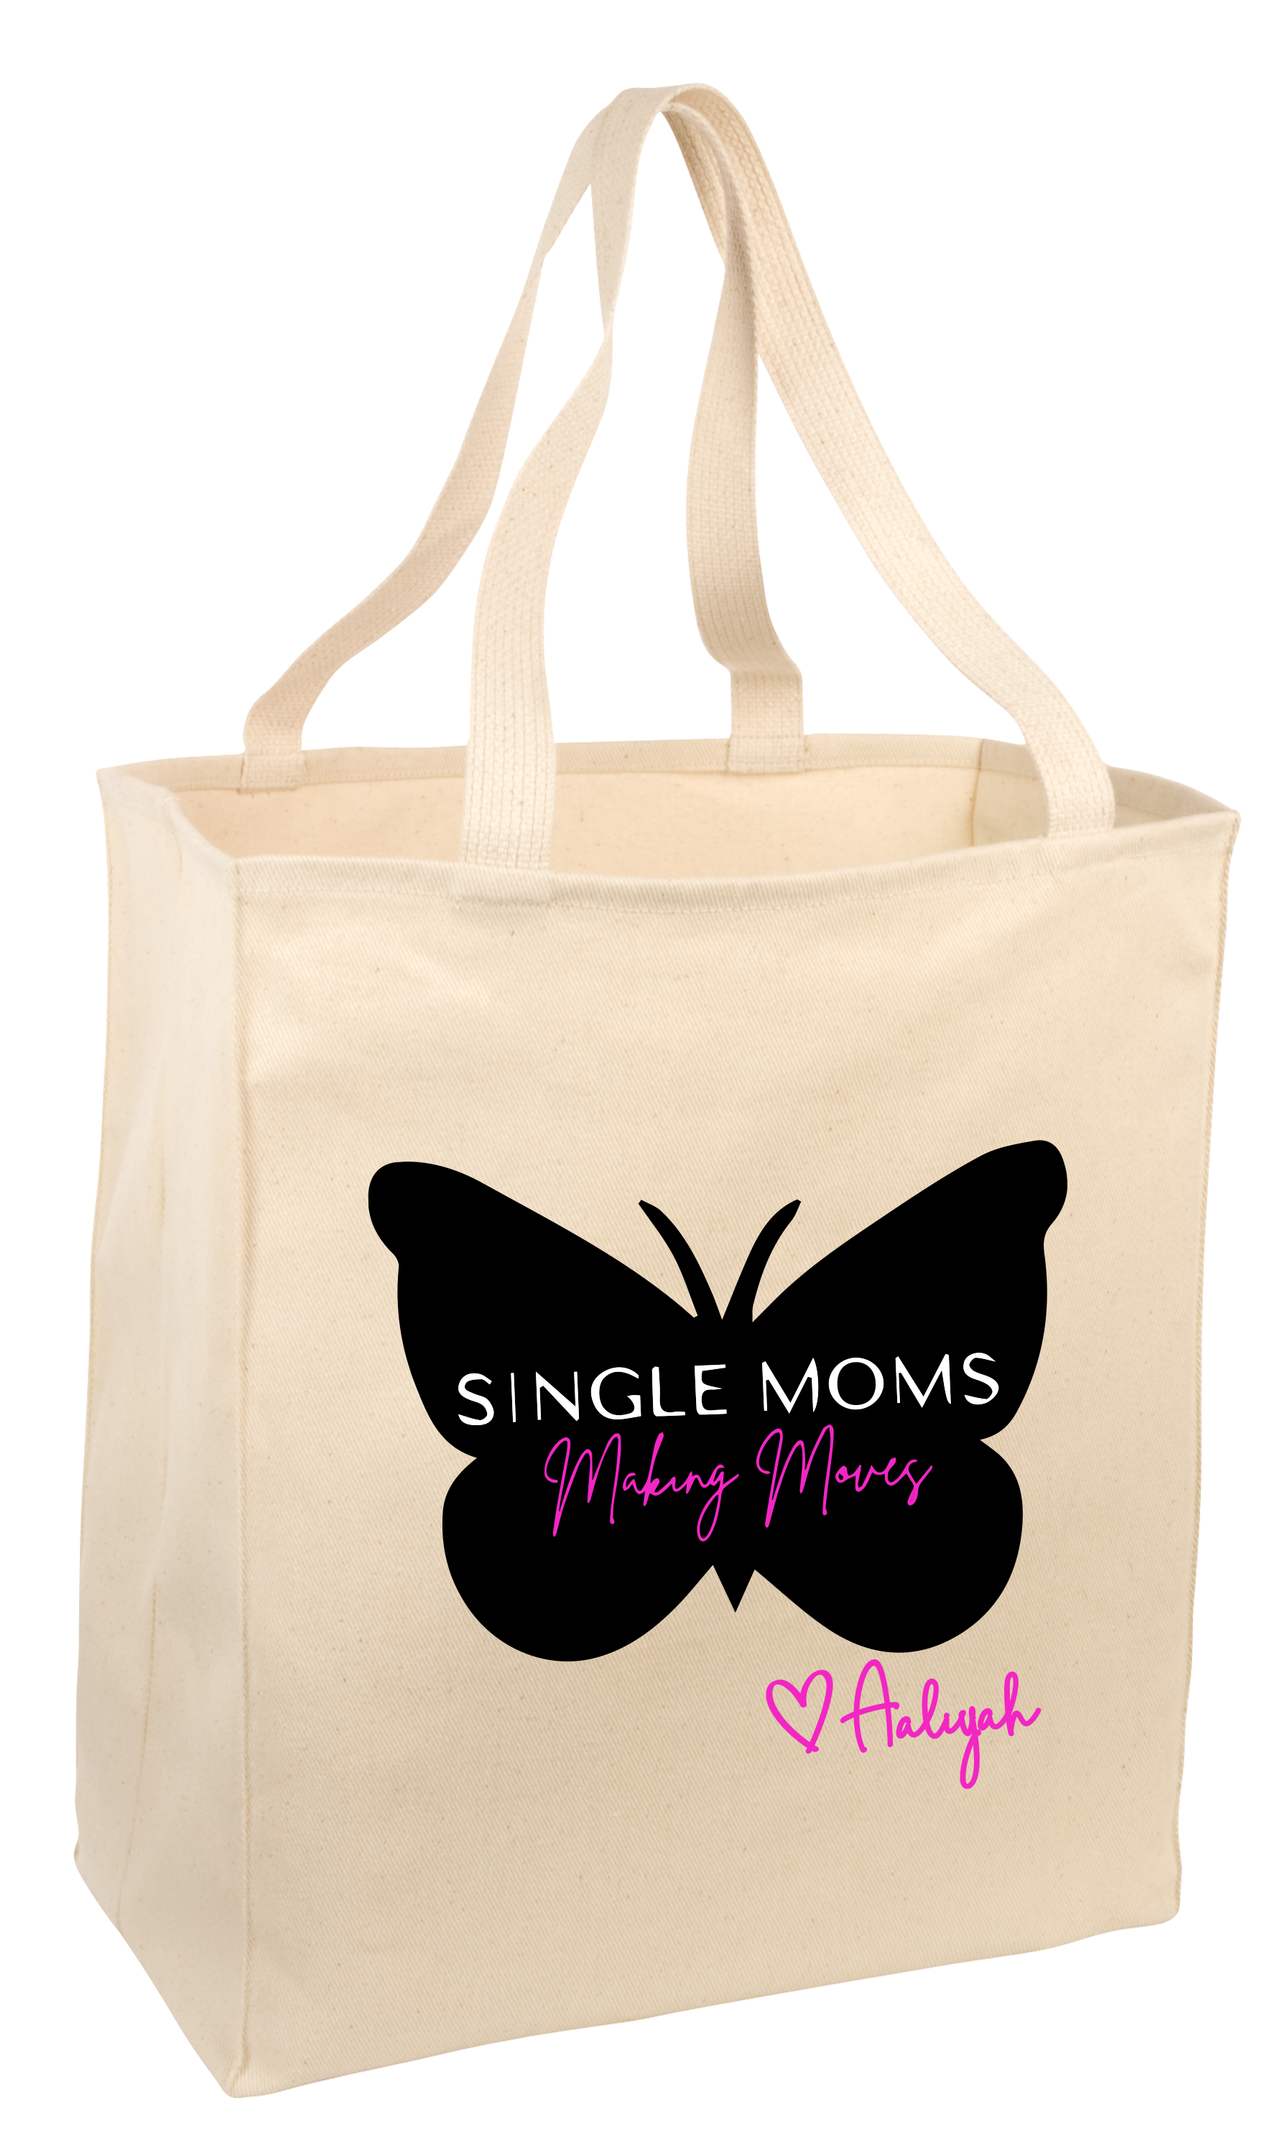 Single Moms Making Moves Licensed Canvas Tote Bag